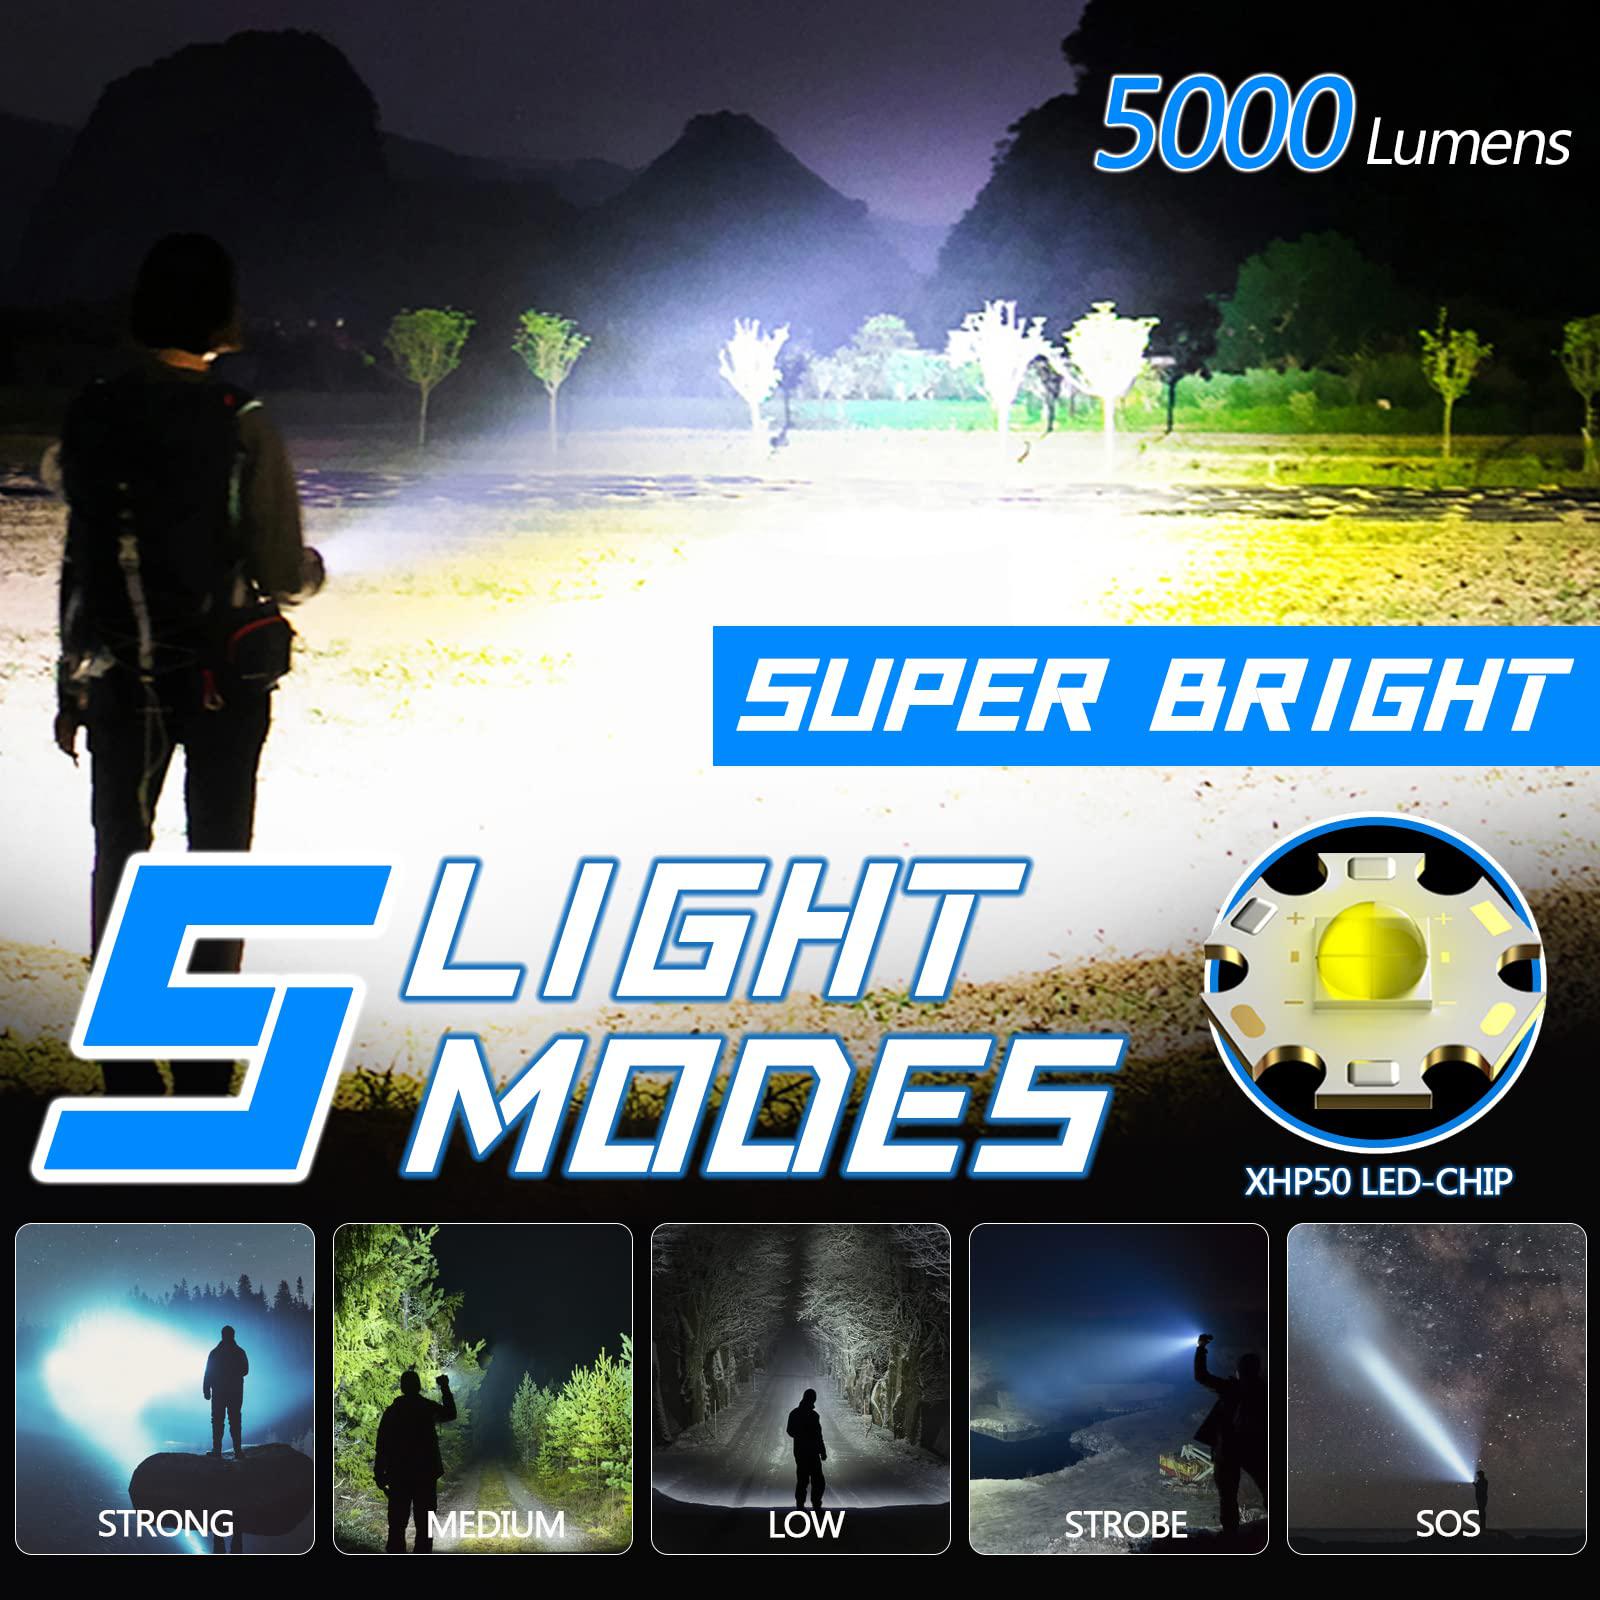 goodea flashlights led high lumens rechargeable, 5000 lumens xhp50 super bright flashlight, high power flash light, 5 light modes, z